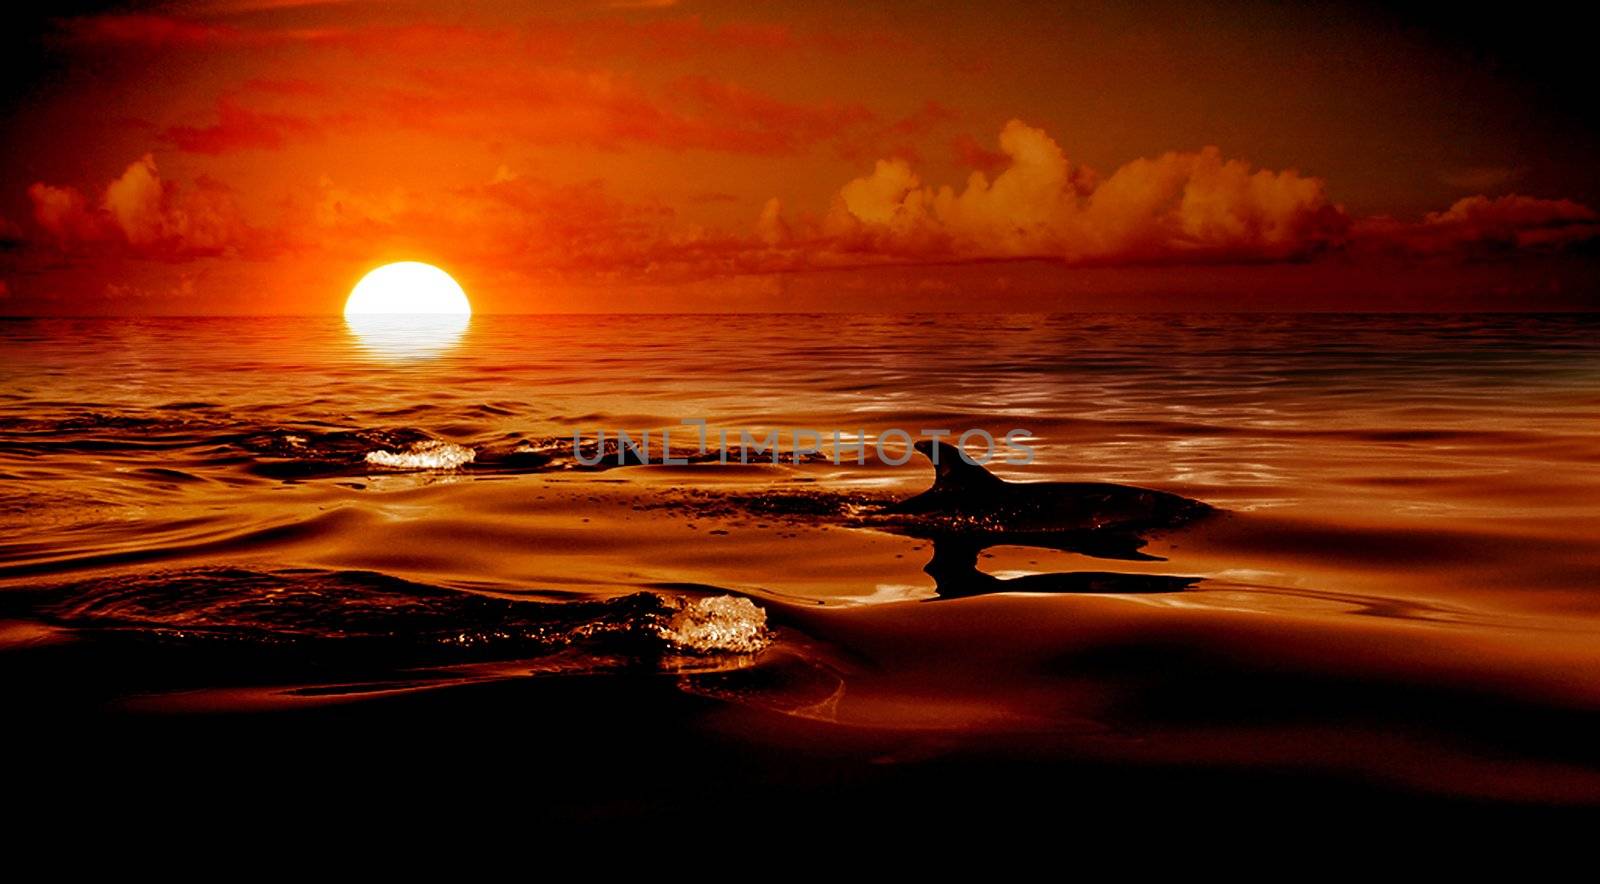 Dolphin in the ocean by jpcasais